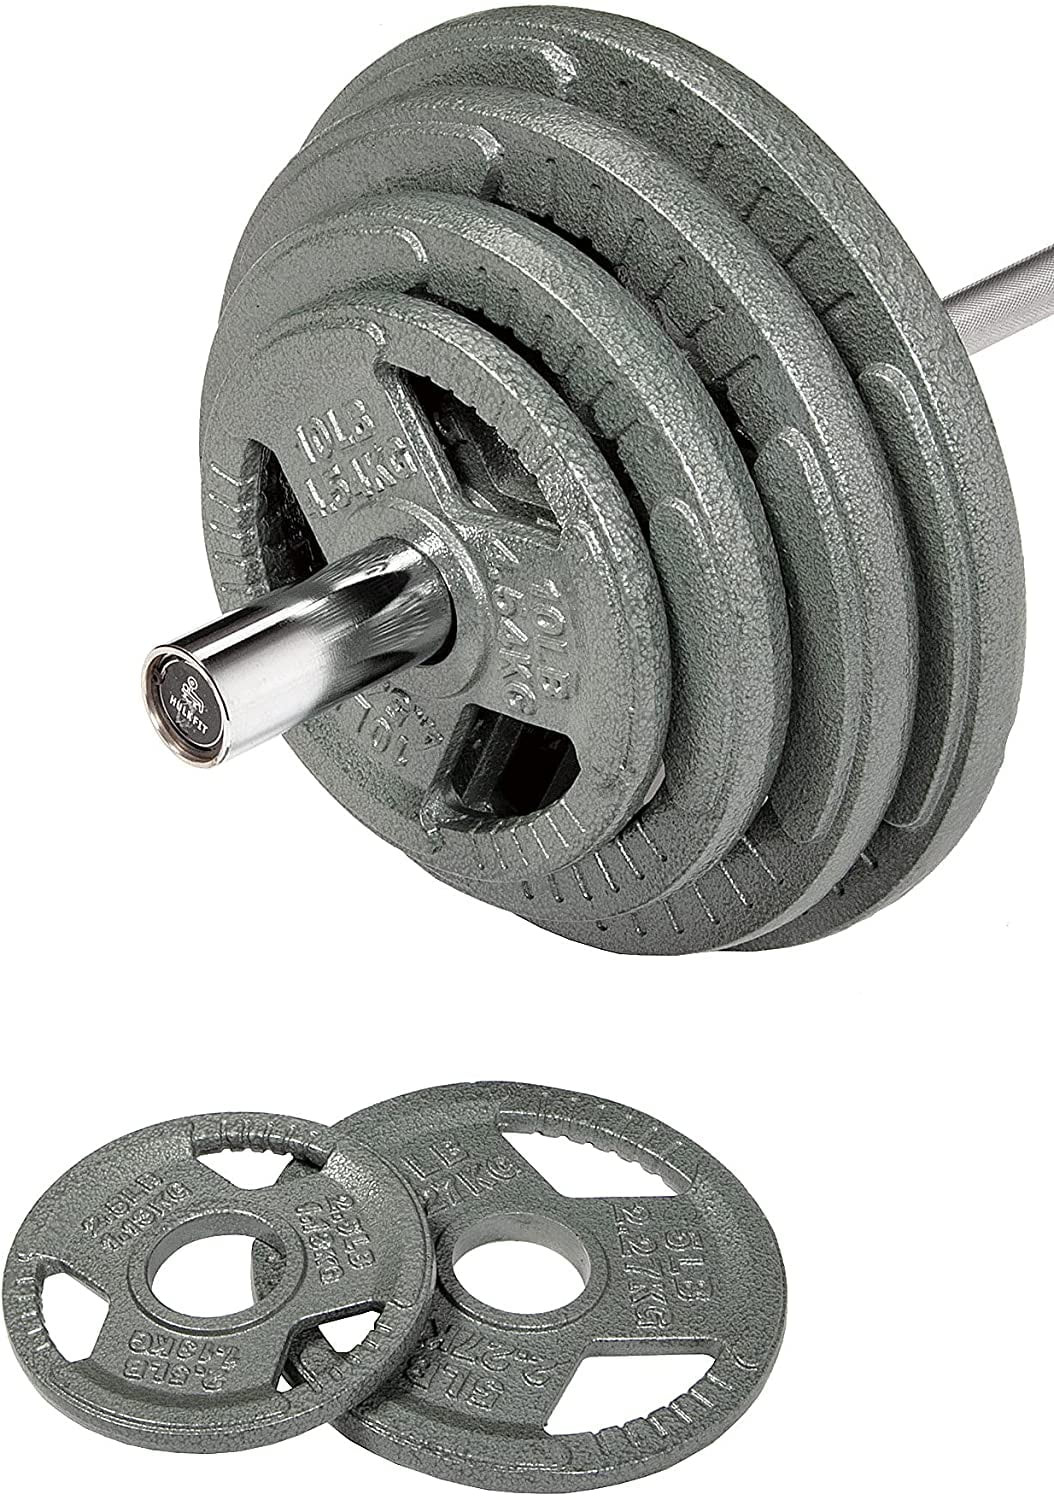 Iron Grip Barbell Co – Premium American-Made Strength Equipment